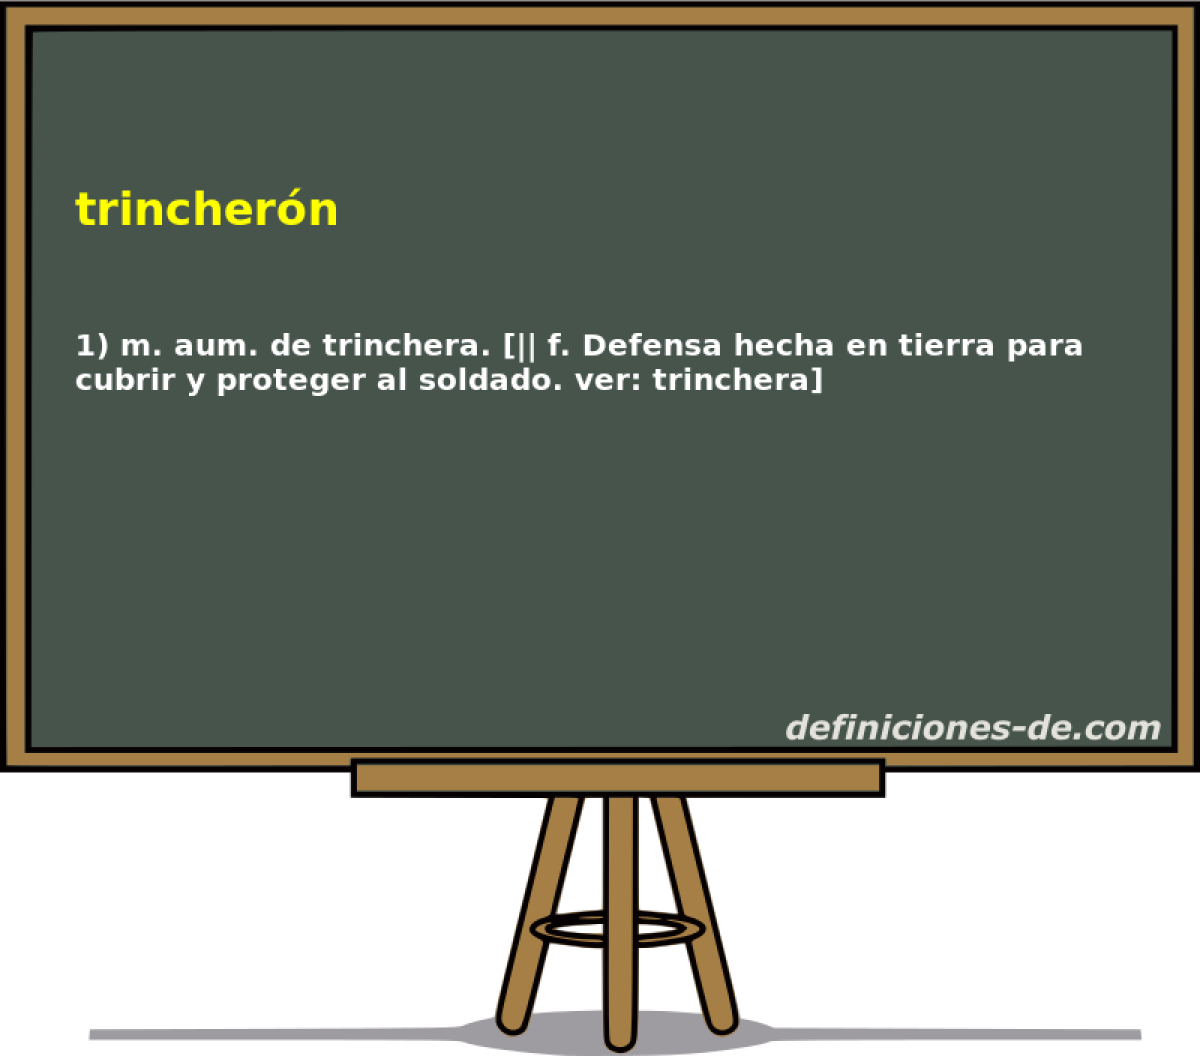 trinchern 